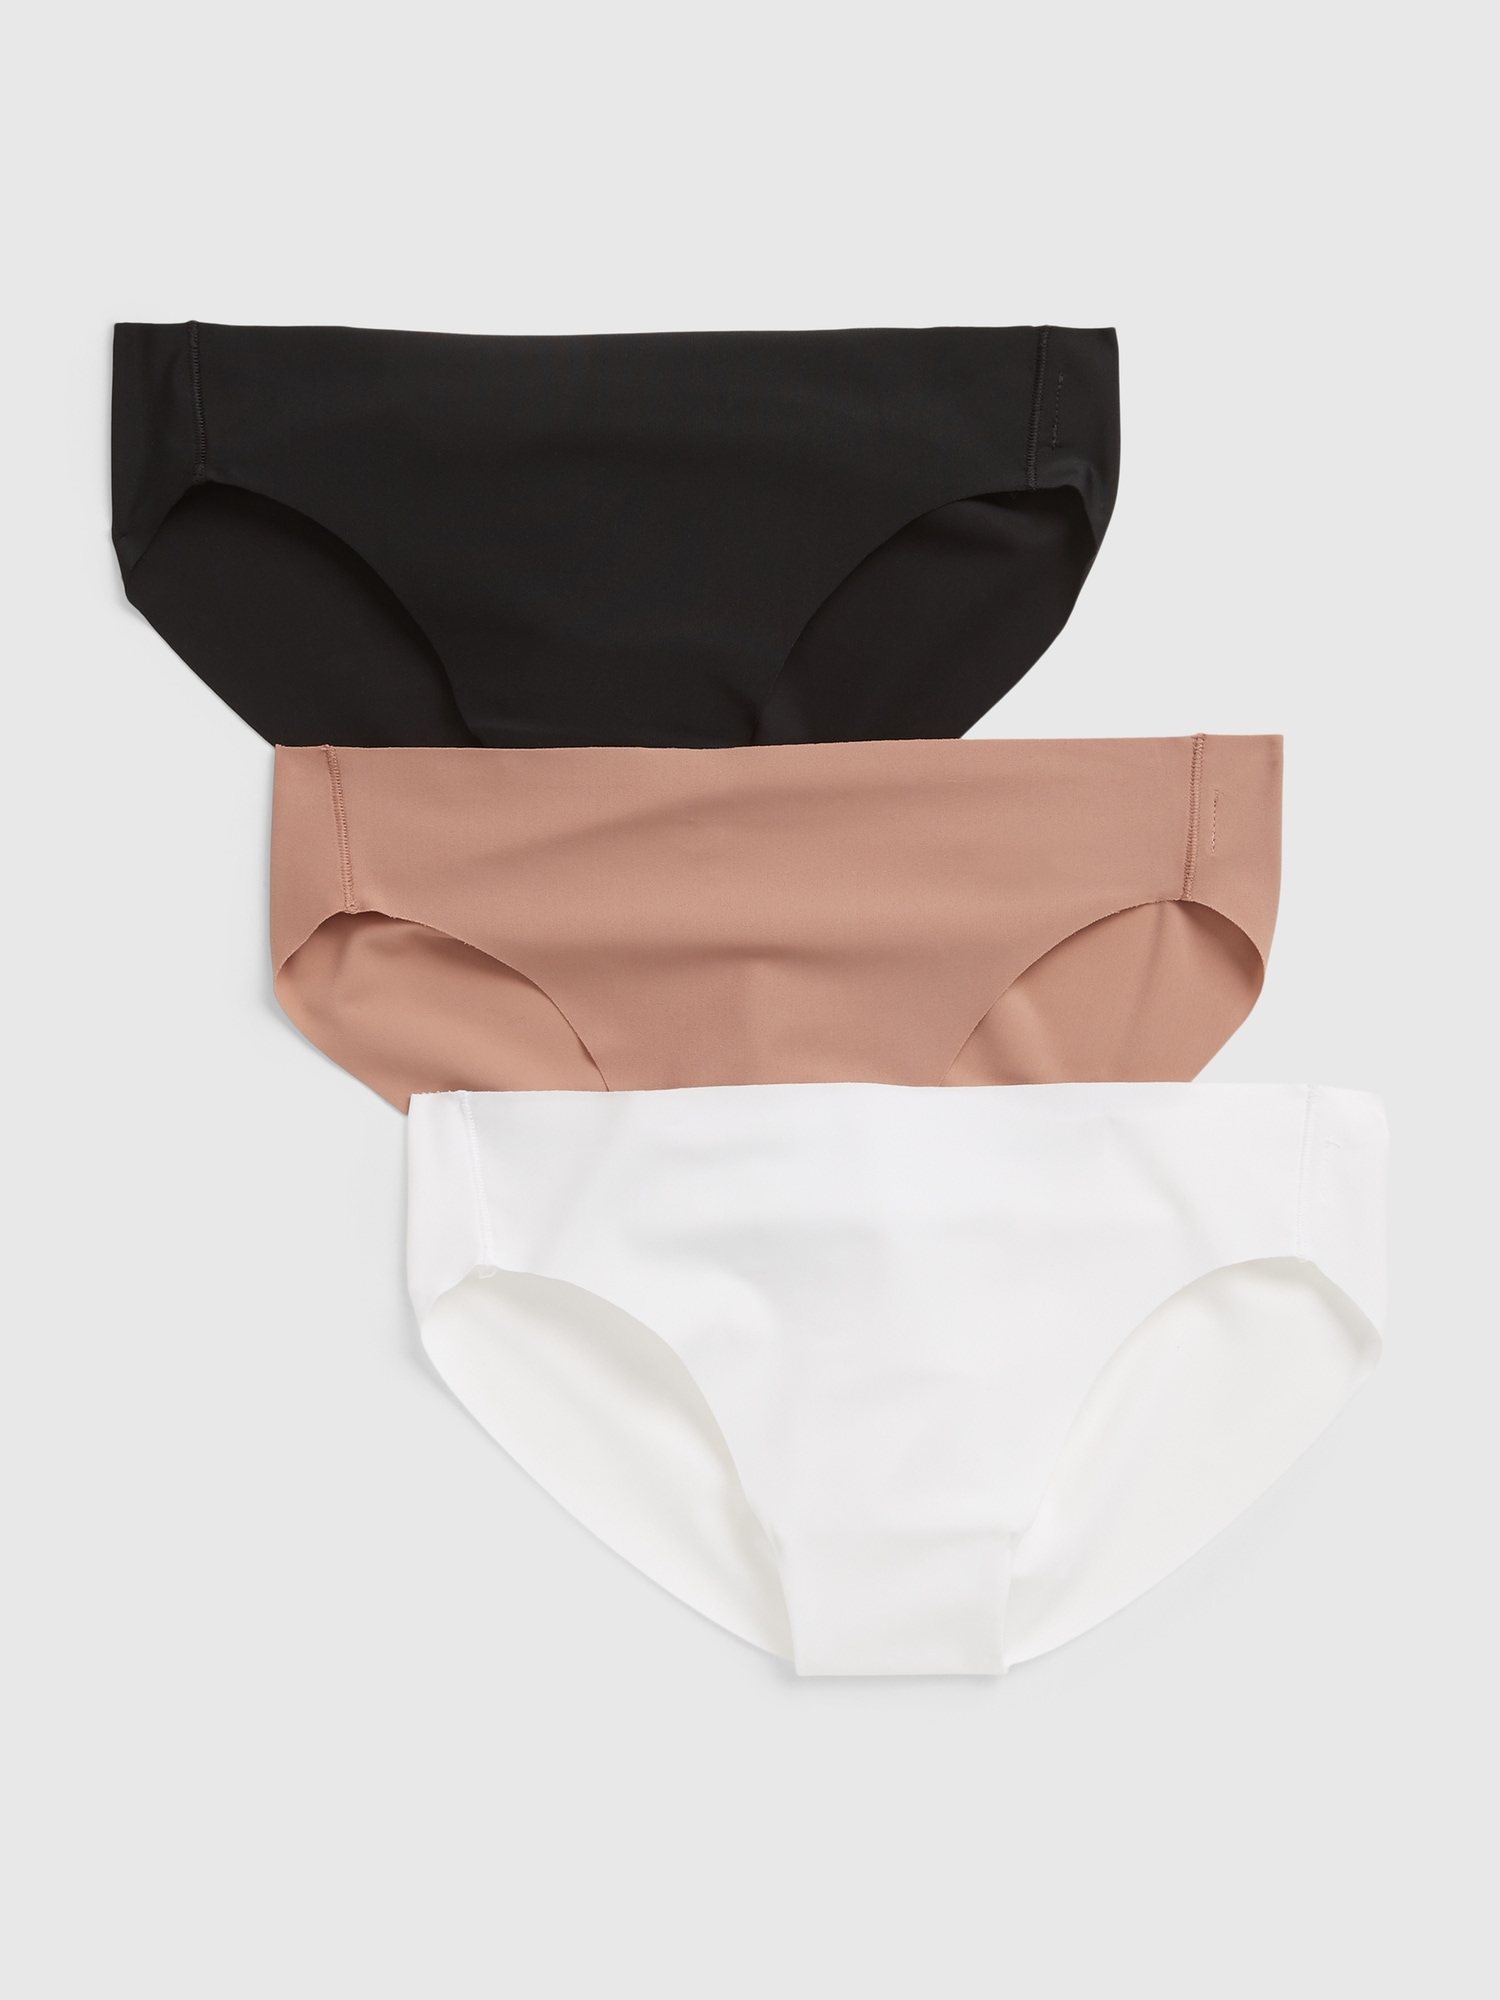 Cabana Cotton Seamless Bikini Panty - 3 Pack Black/White/Grey L by